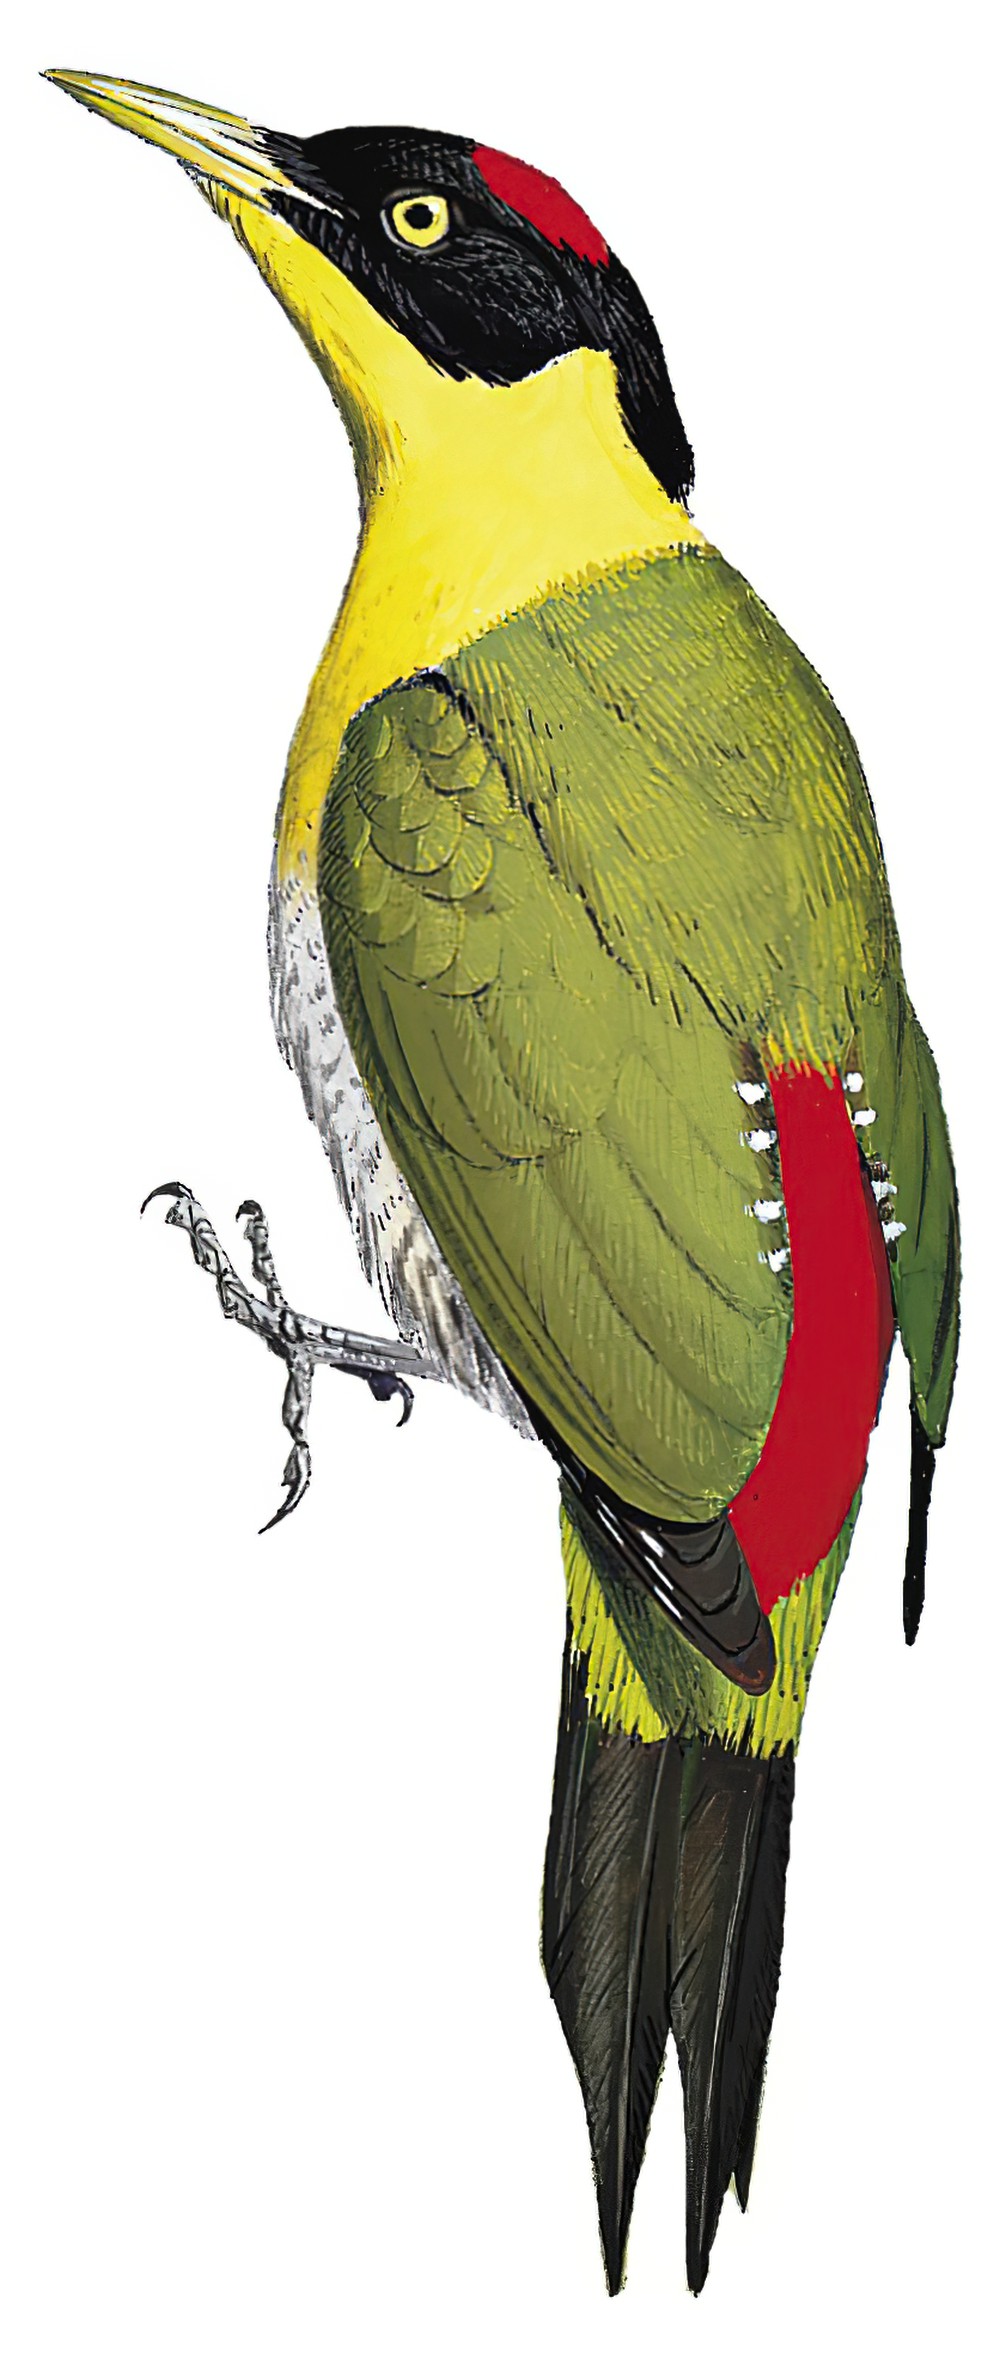 Black-headed Woodpecker / Picus erythropygius